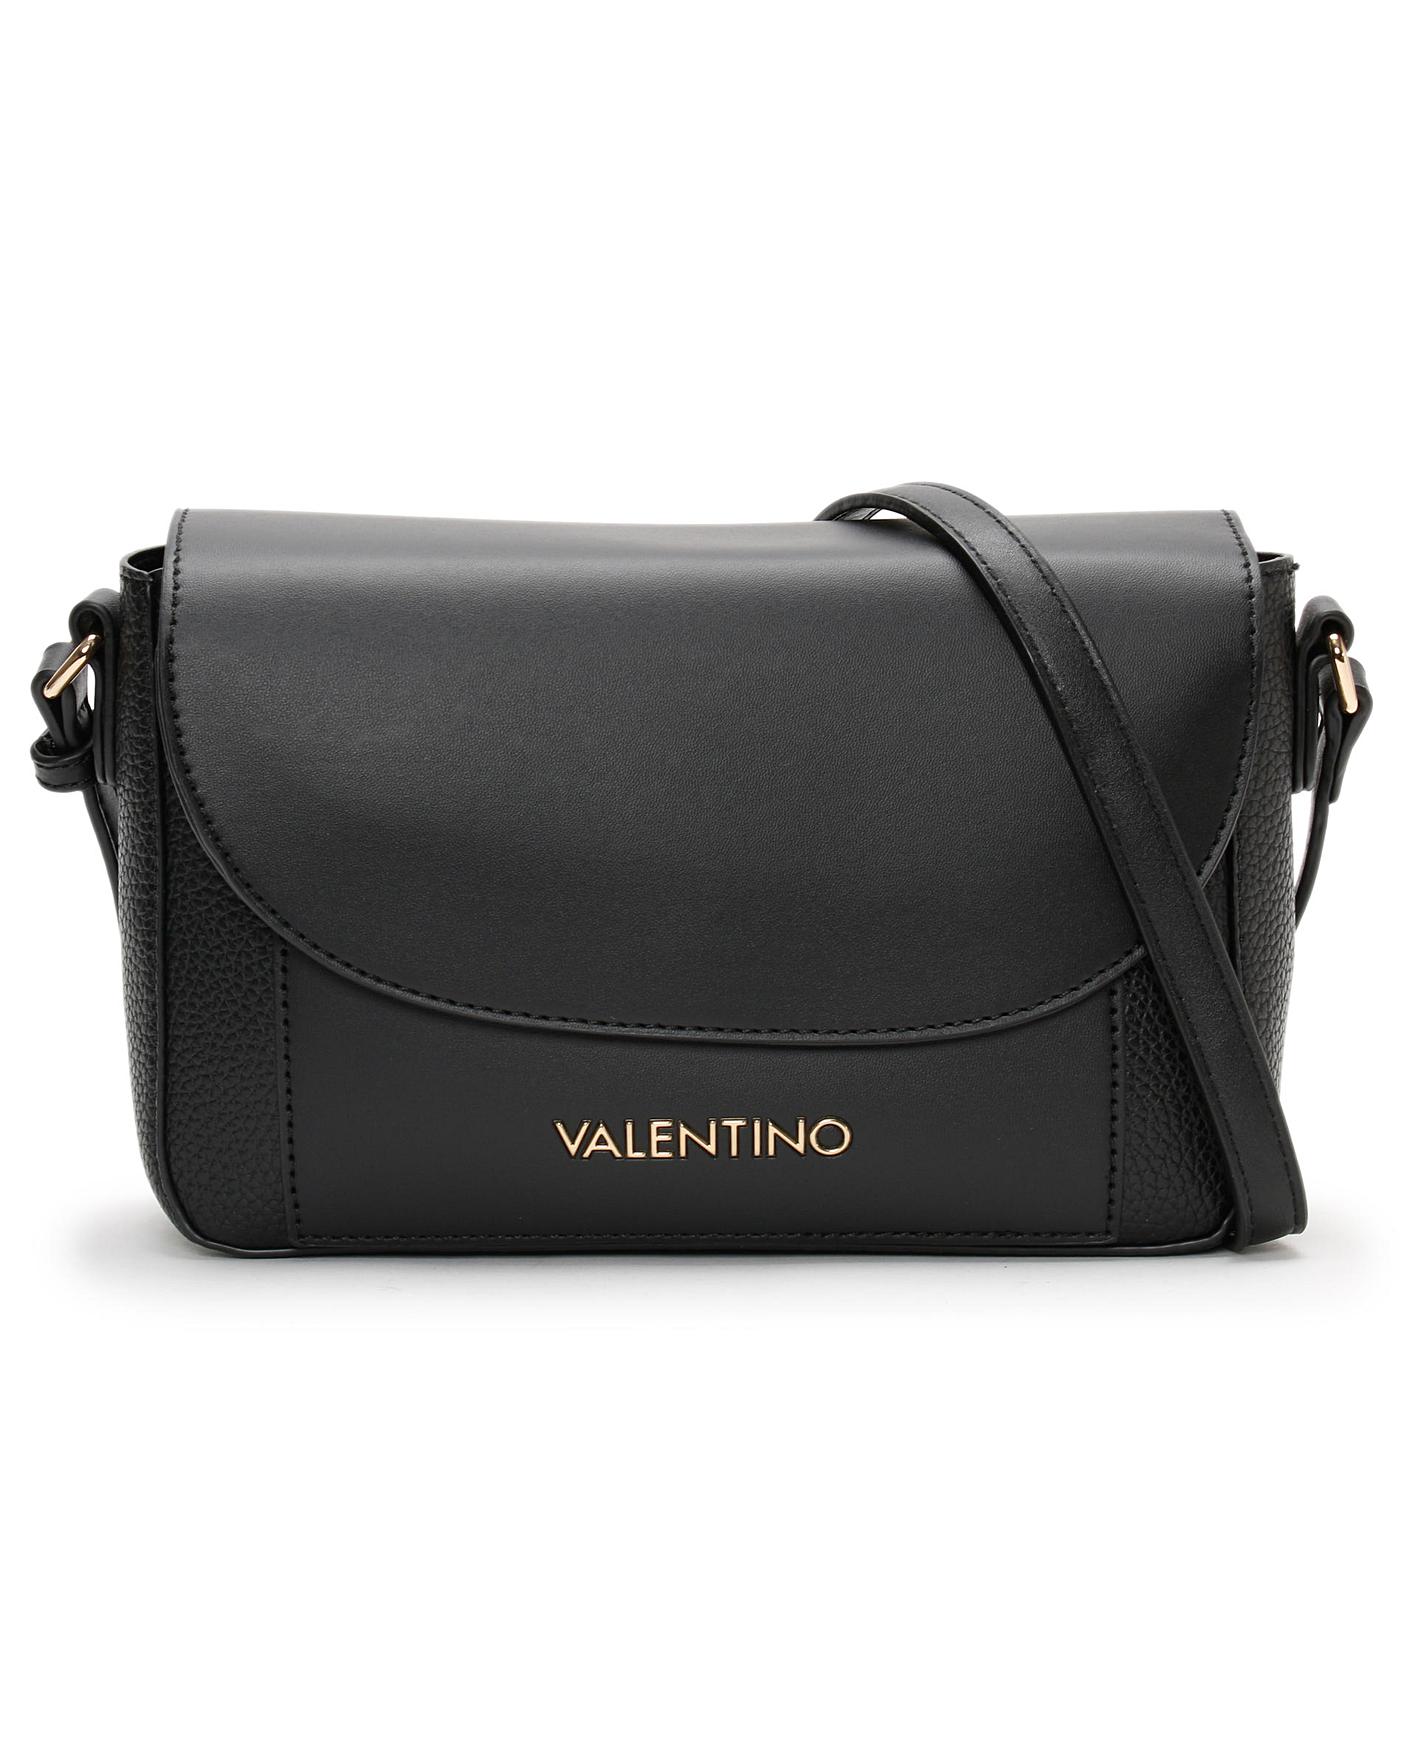 Valentino Bags Willow Black Satchel Bag | J D Williams